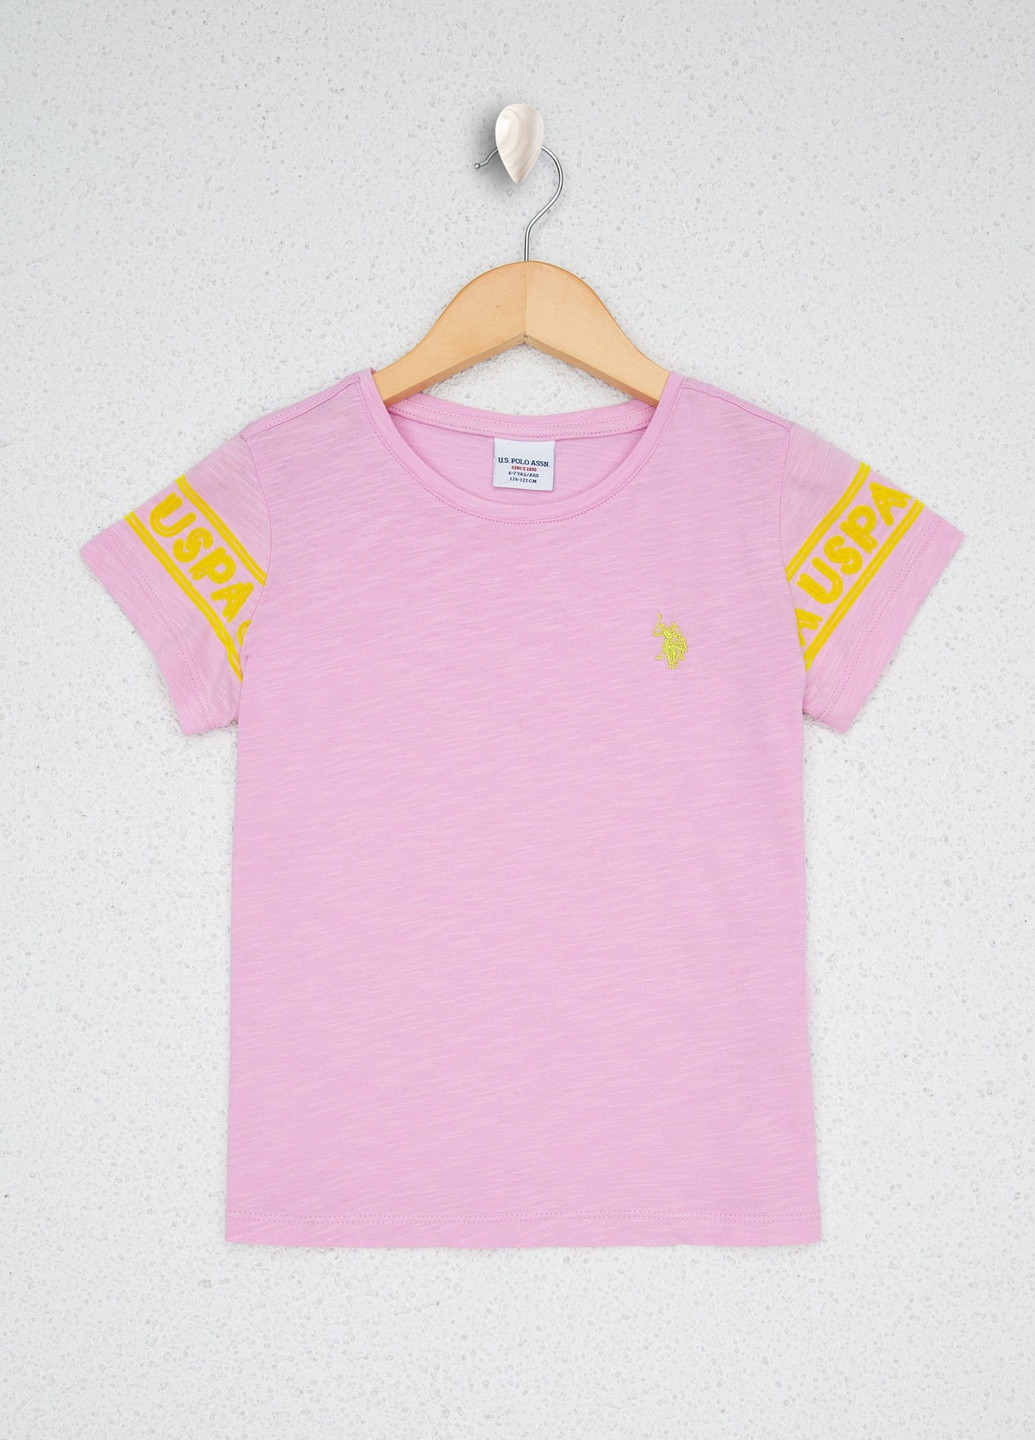 Светло-розовая детская футболка-футболка u.s/ polo assn. на девочку для девочки U.S. Polo Assn.